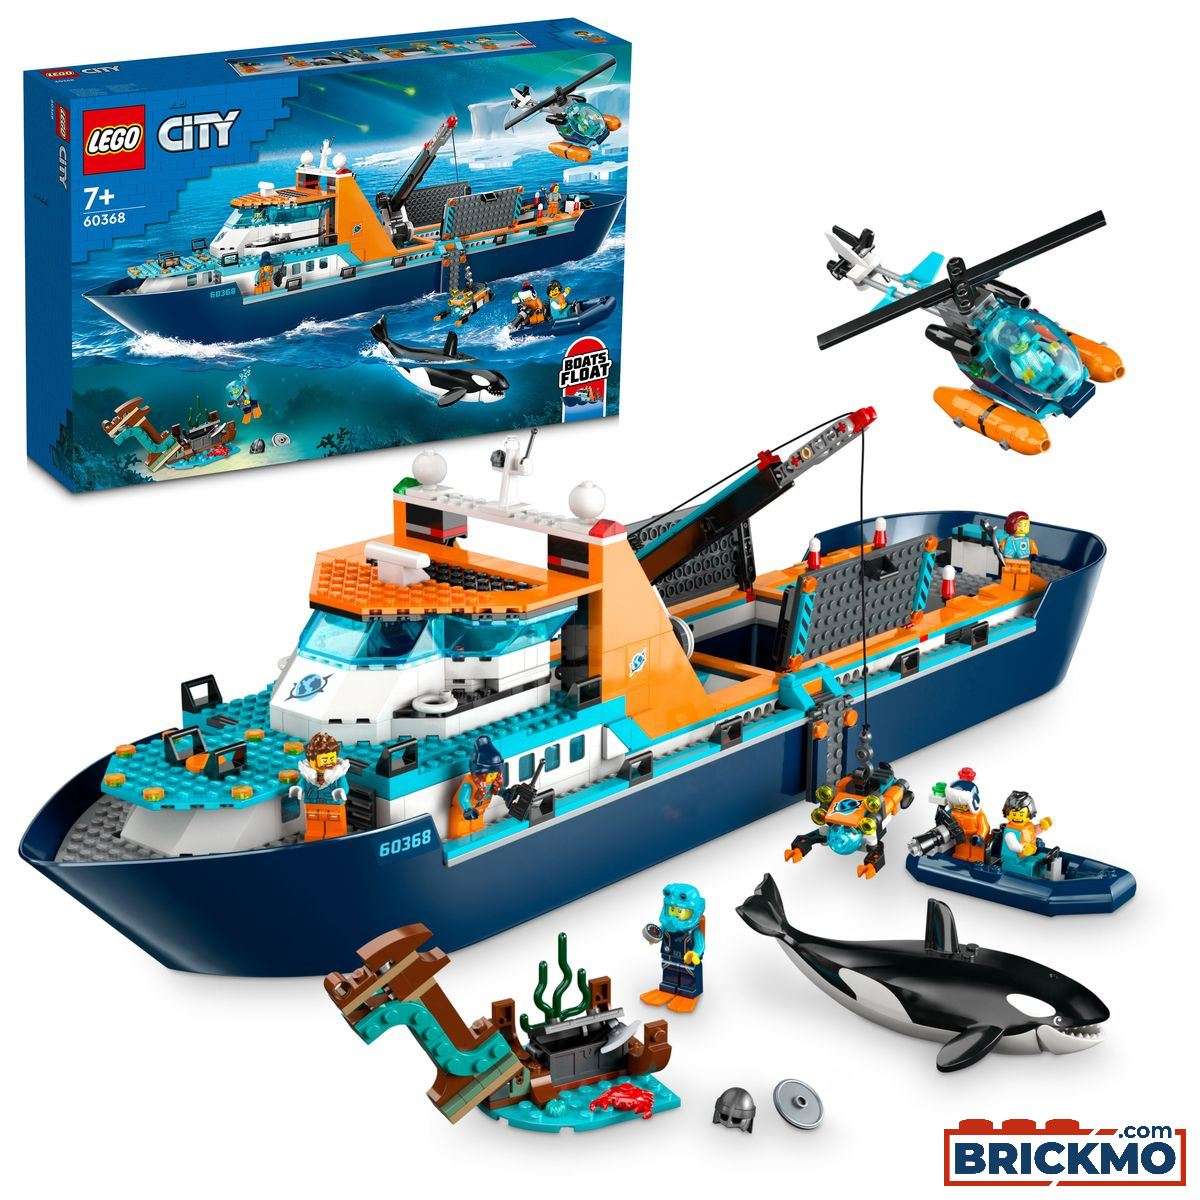 LEGO City 60368 Arktis-Forschungsschiff 60368